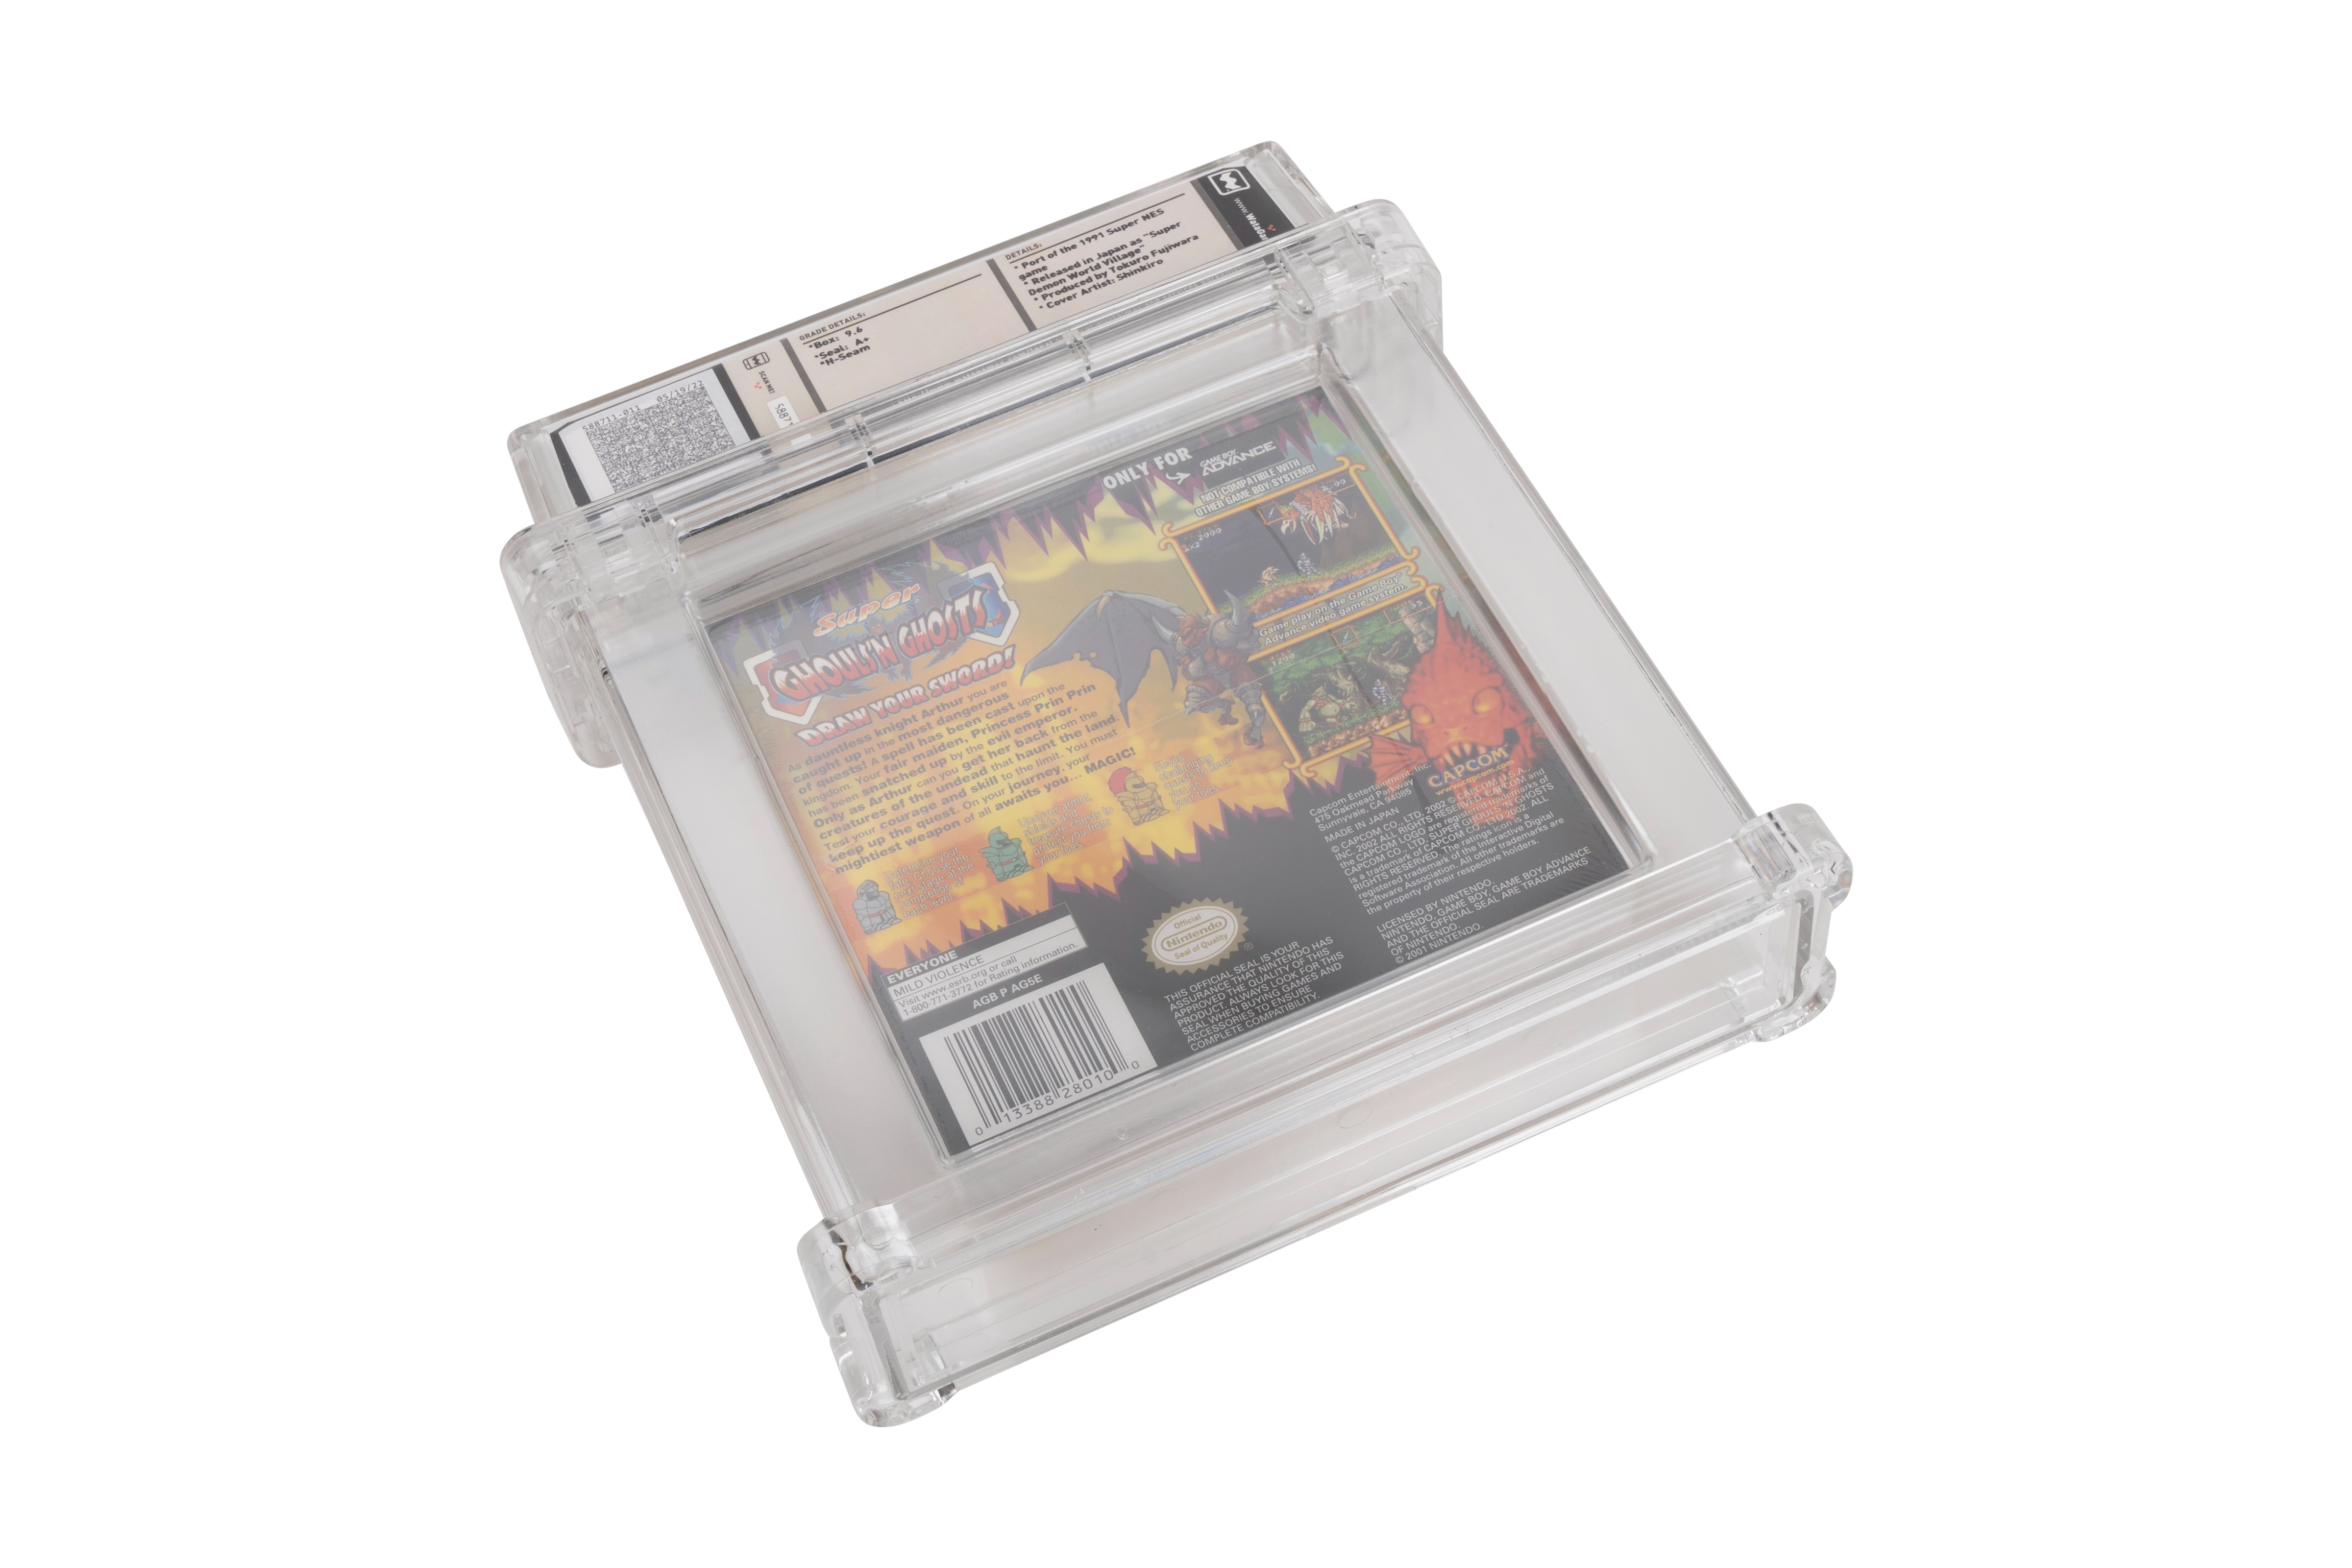 Nintendo - WATA Super Ghouls'n Ghosts 9.6 A+ - Game Boy Advanced - Image 2 of 2